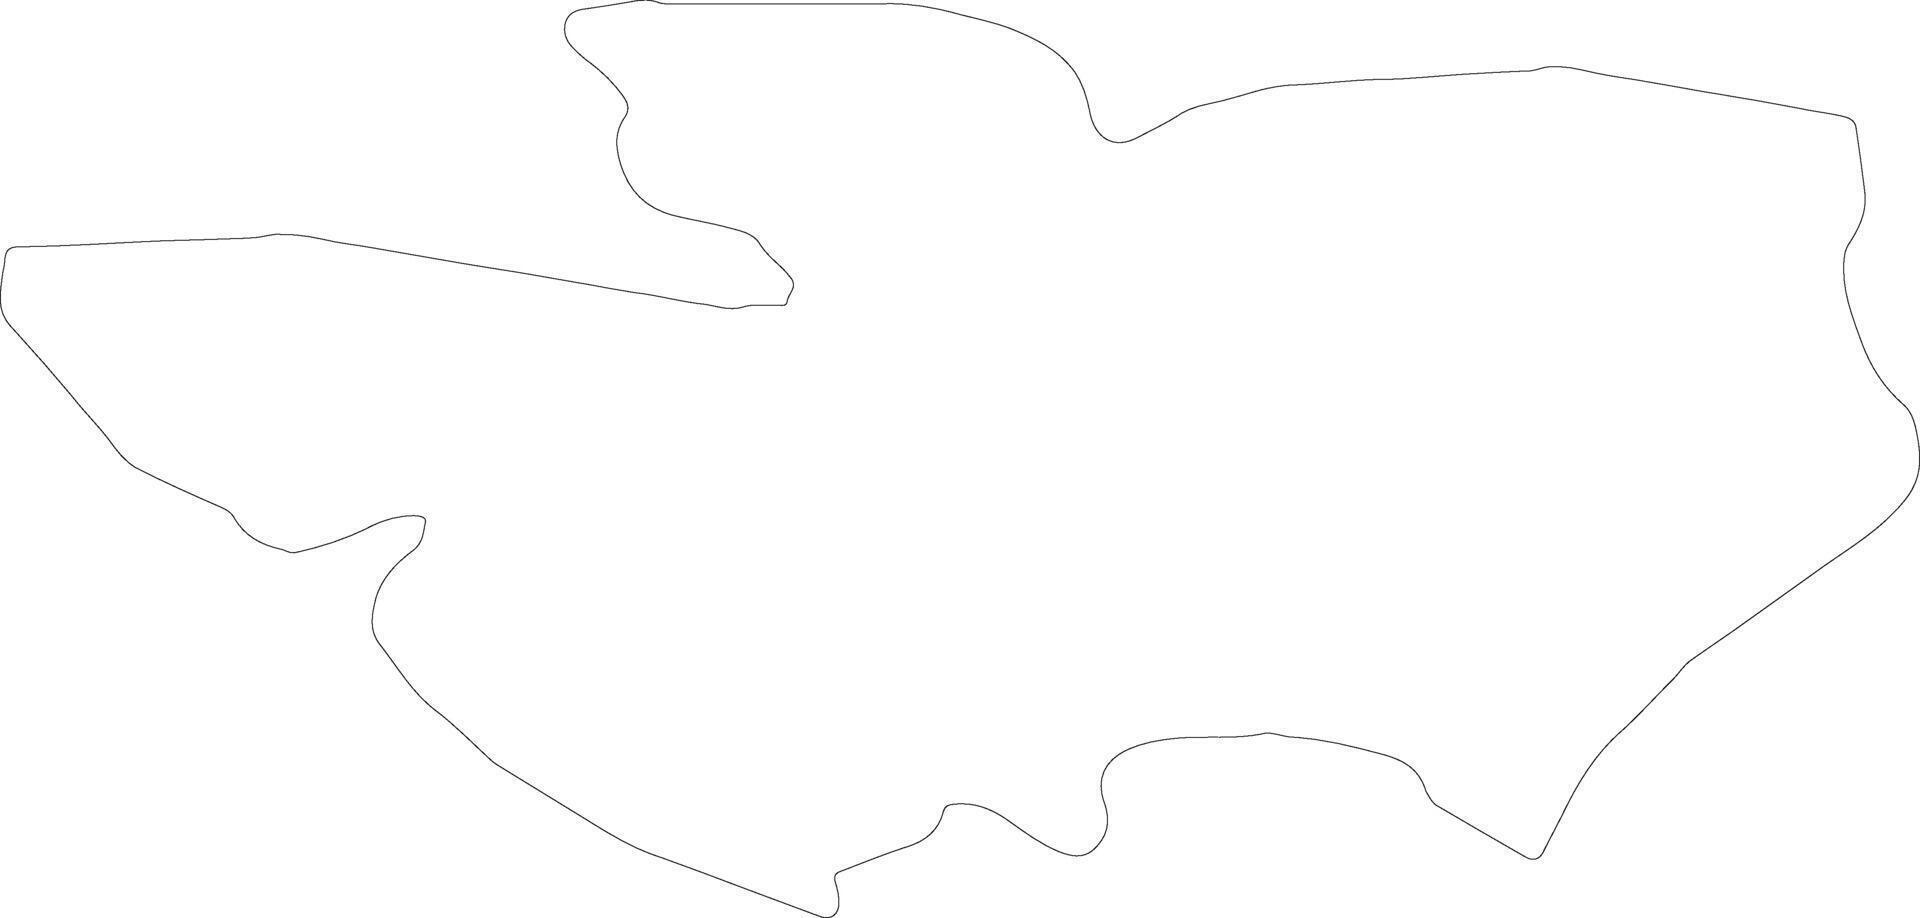 Sevnica Slovenia outline map vector